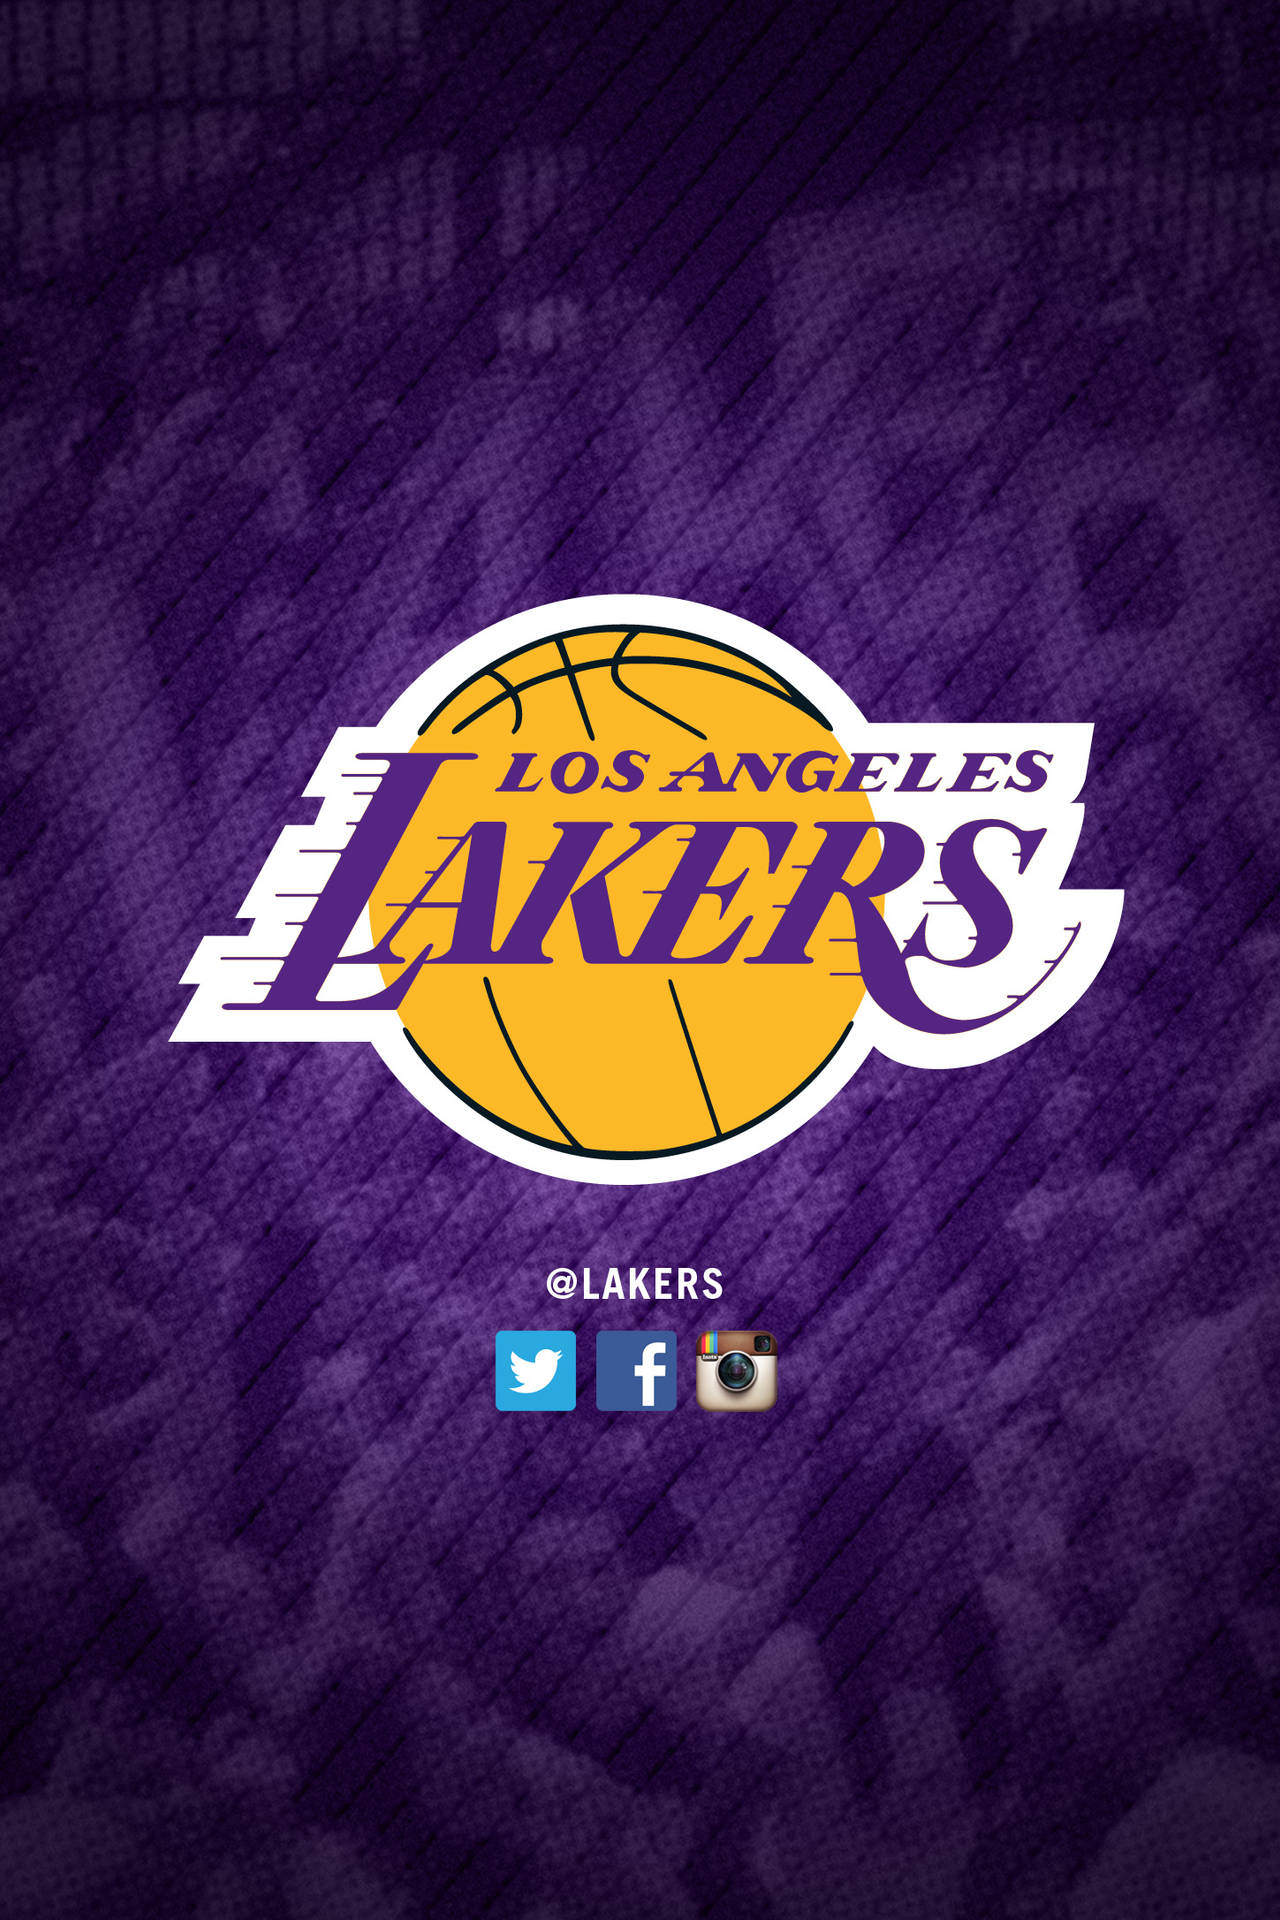 Vis din Lakers stolthed med en Lakers iPhone baggrund! Wallpaper